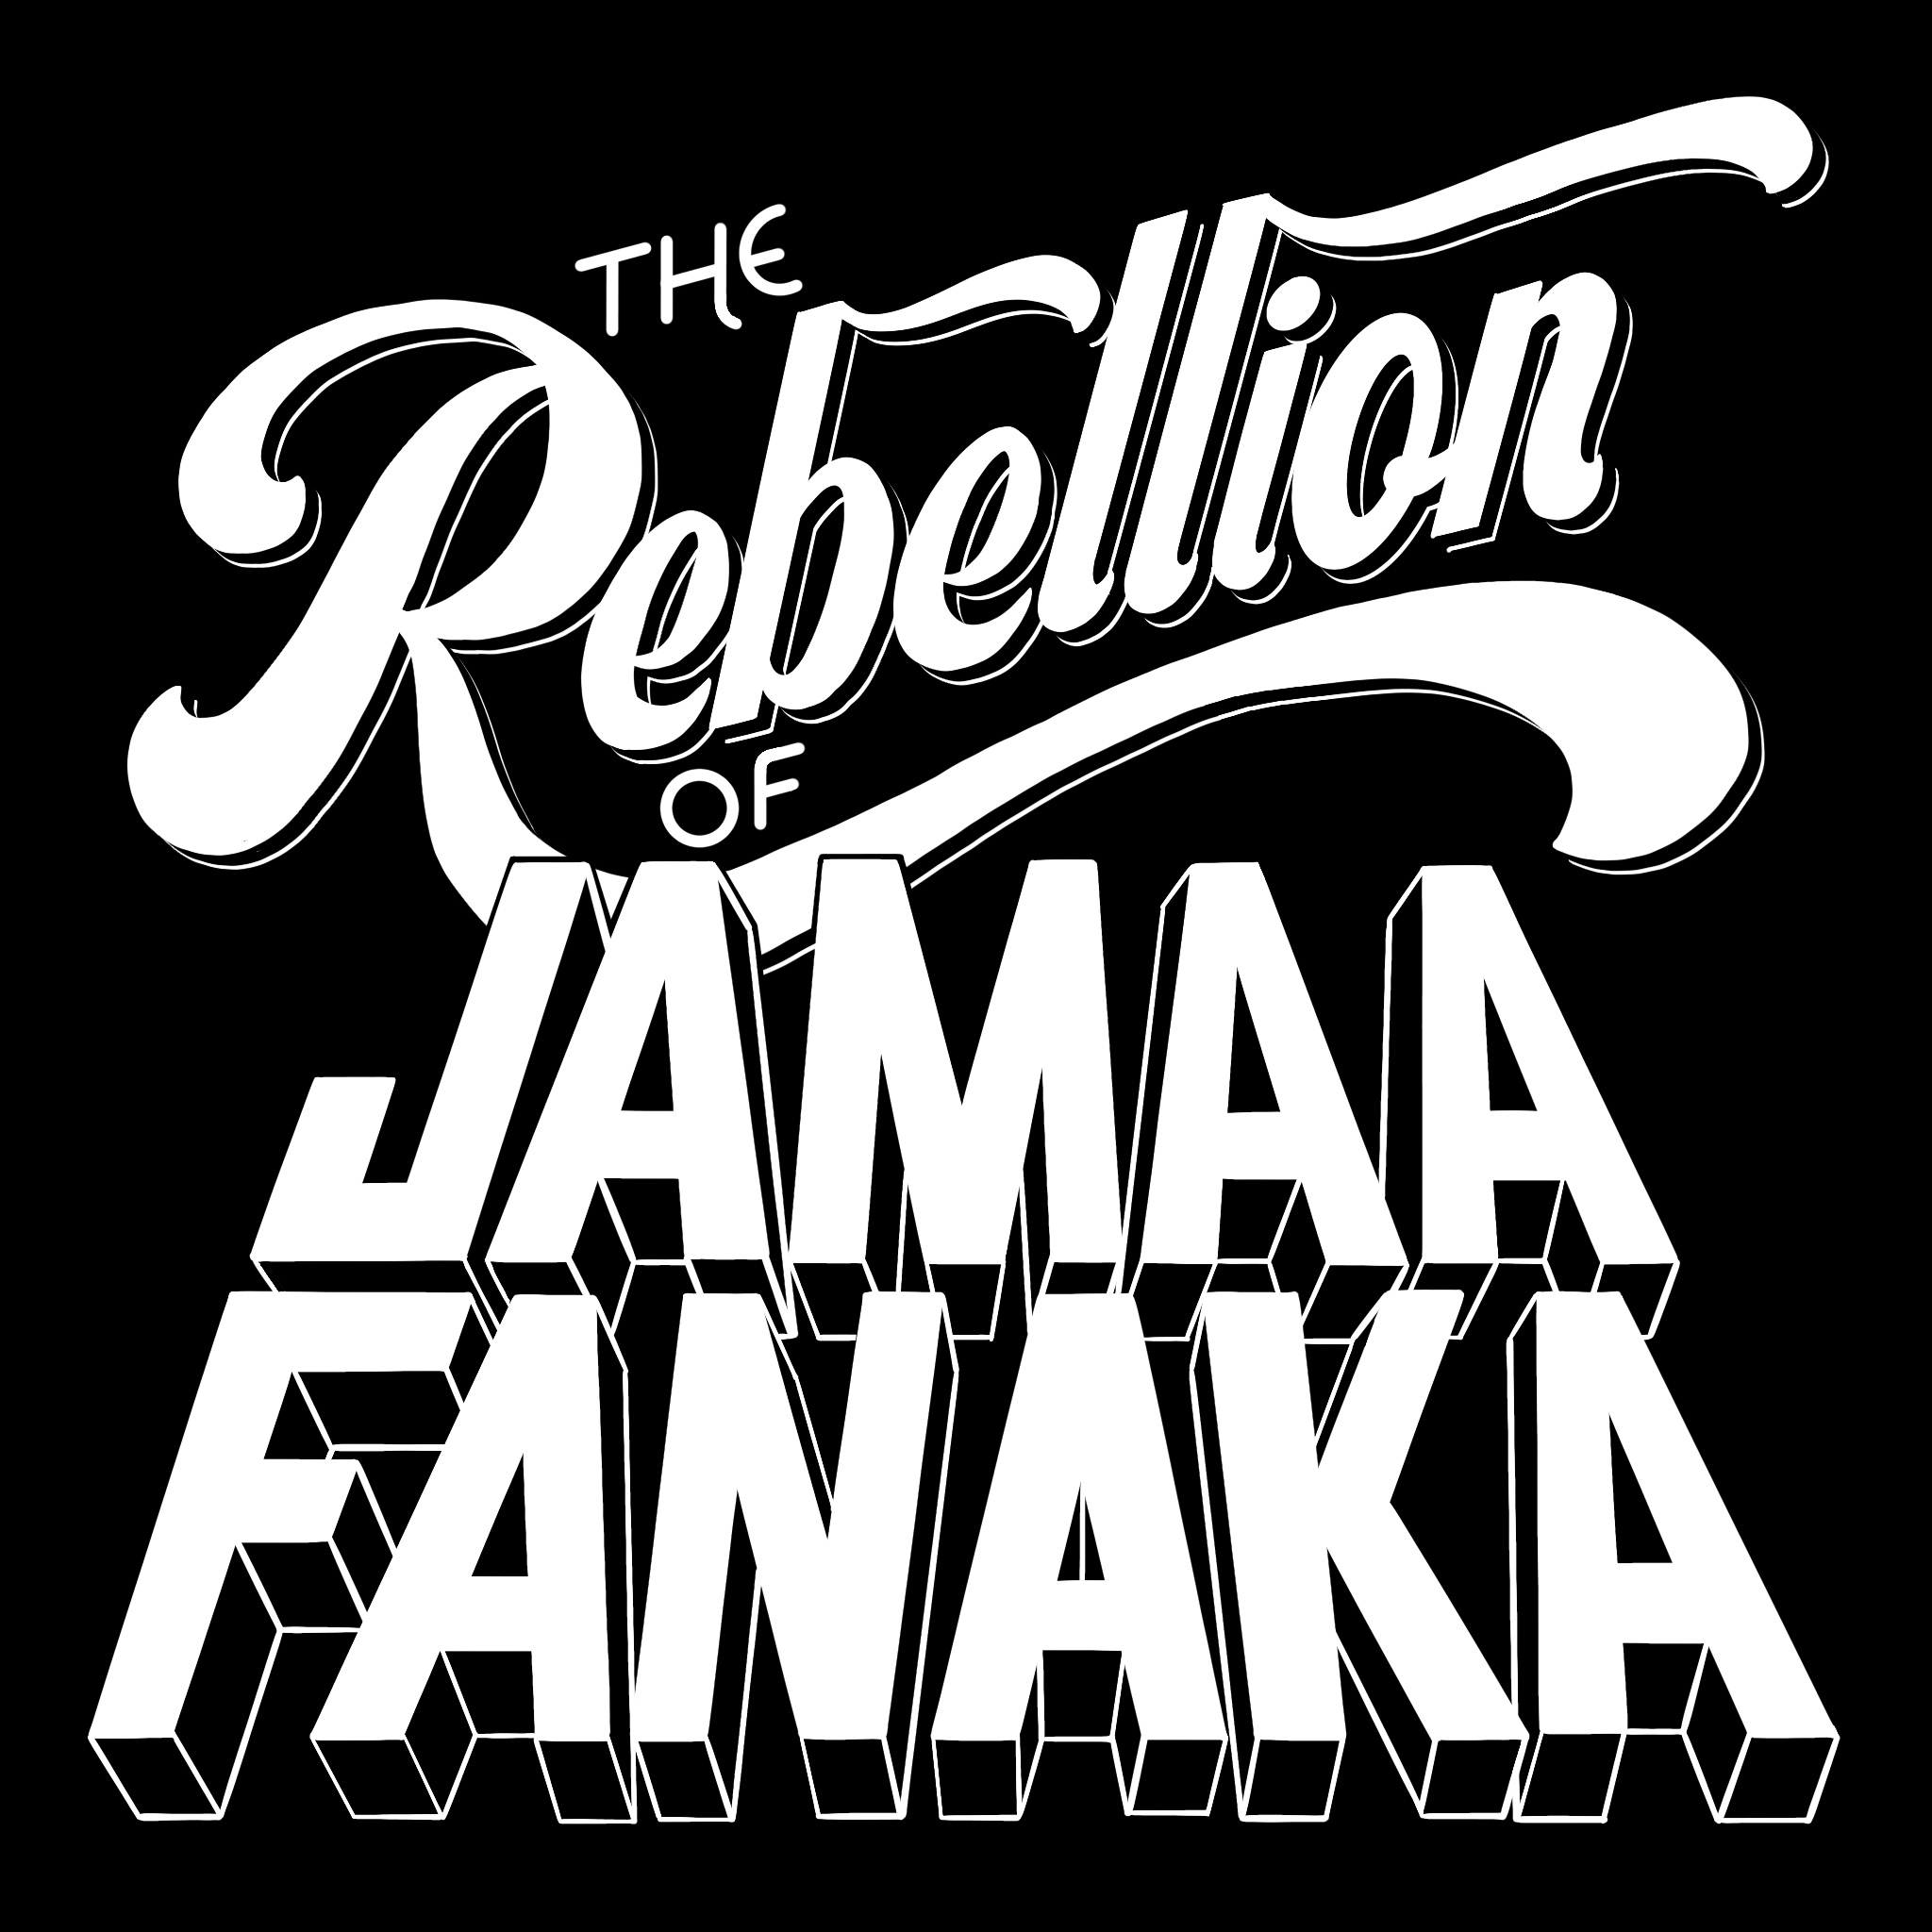 The Rebellion of Jamaa Fanaka Image